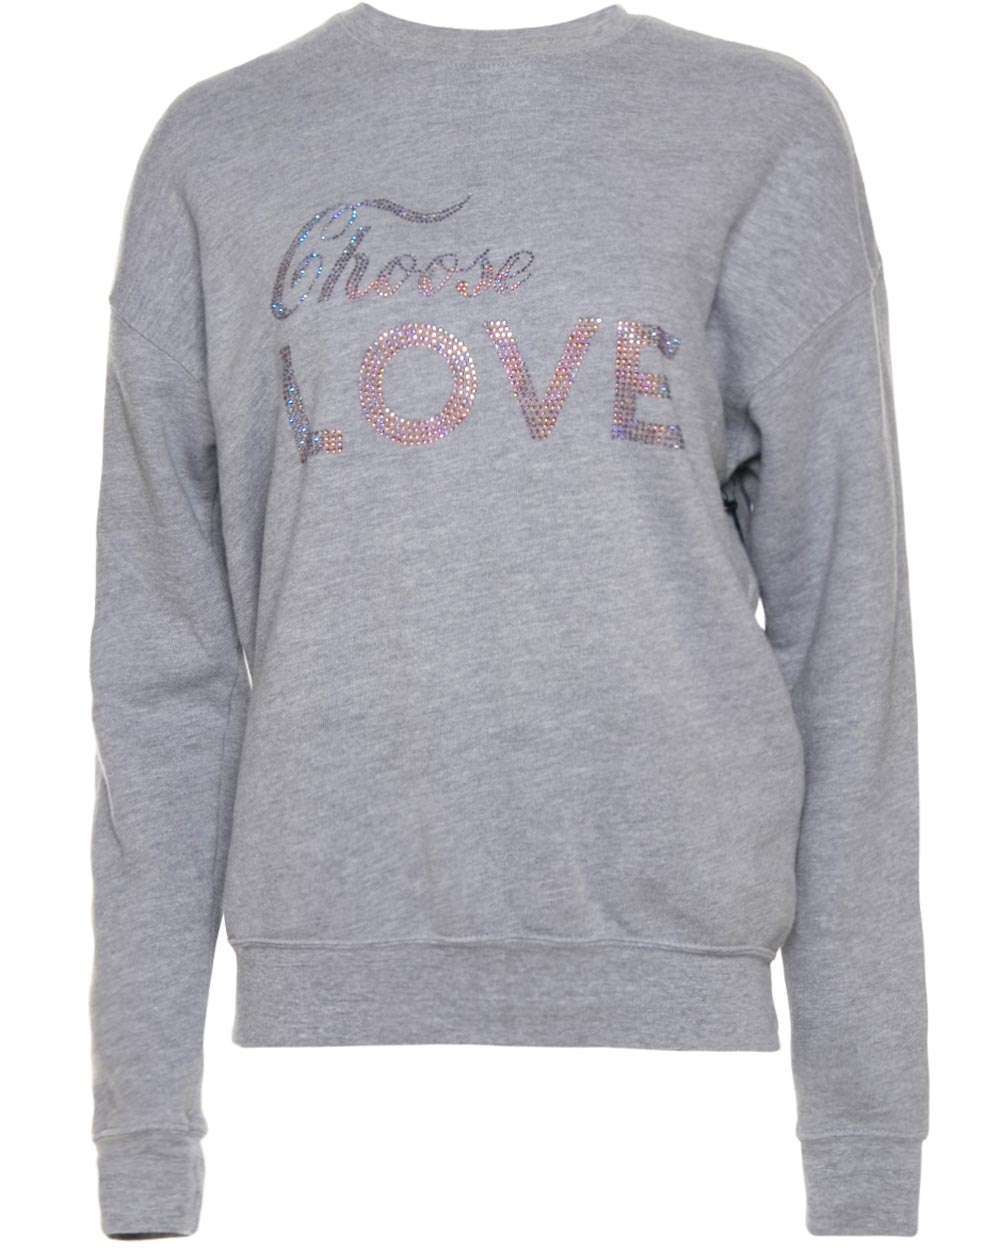 Heather Grey Choose Love Sweatshirt